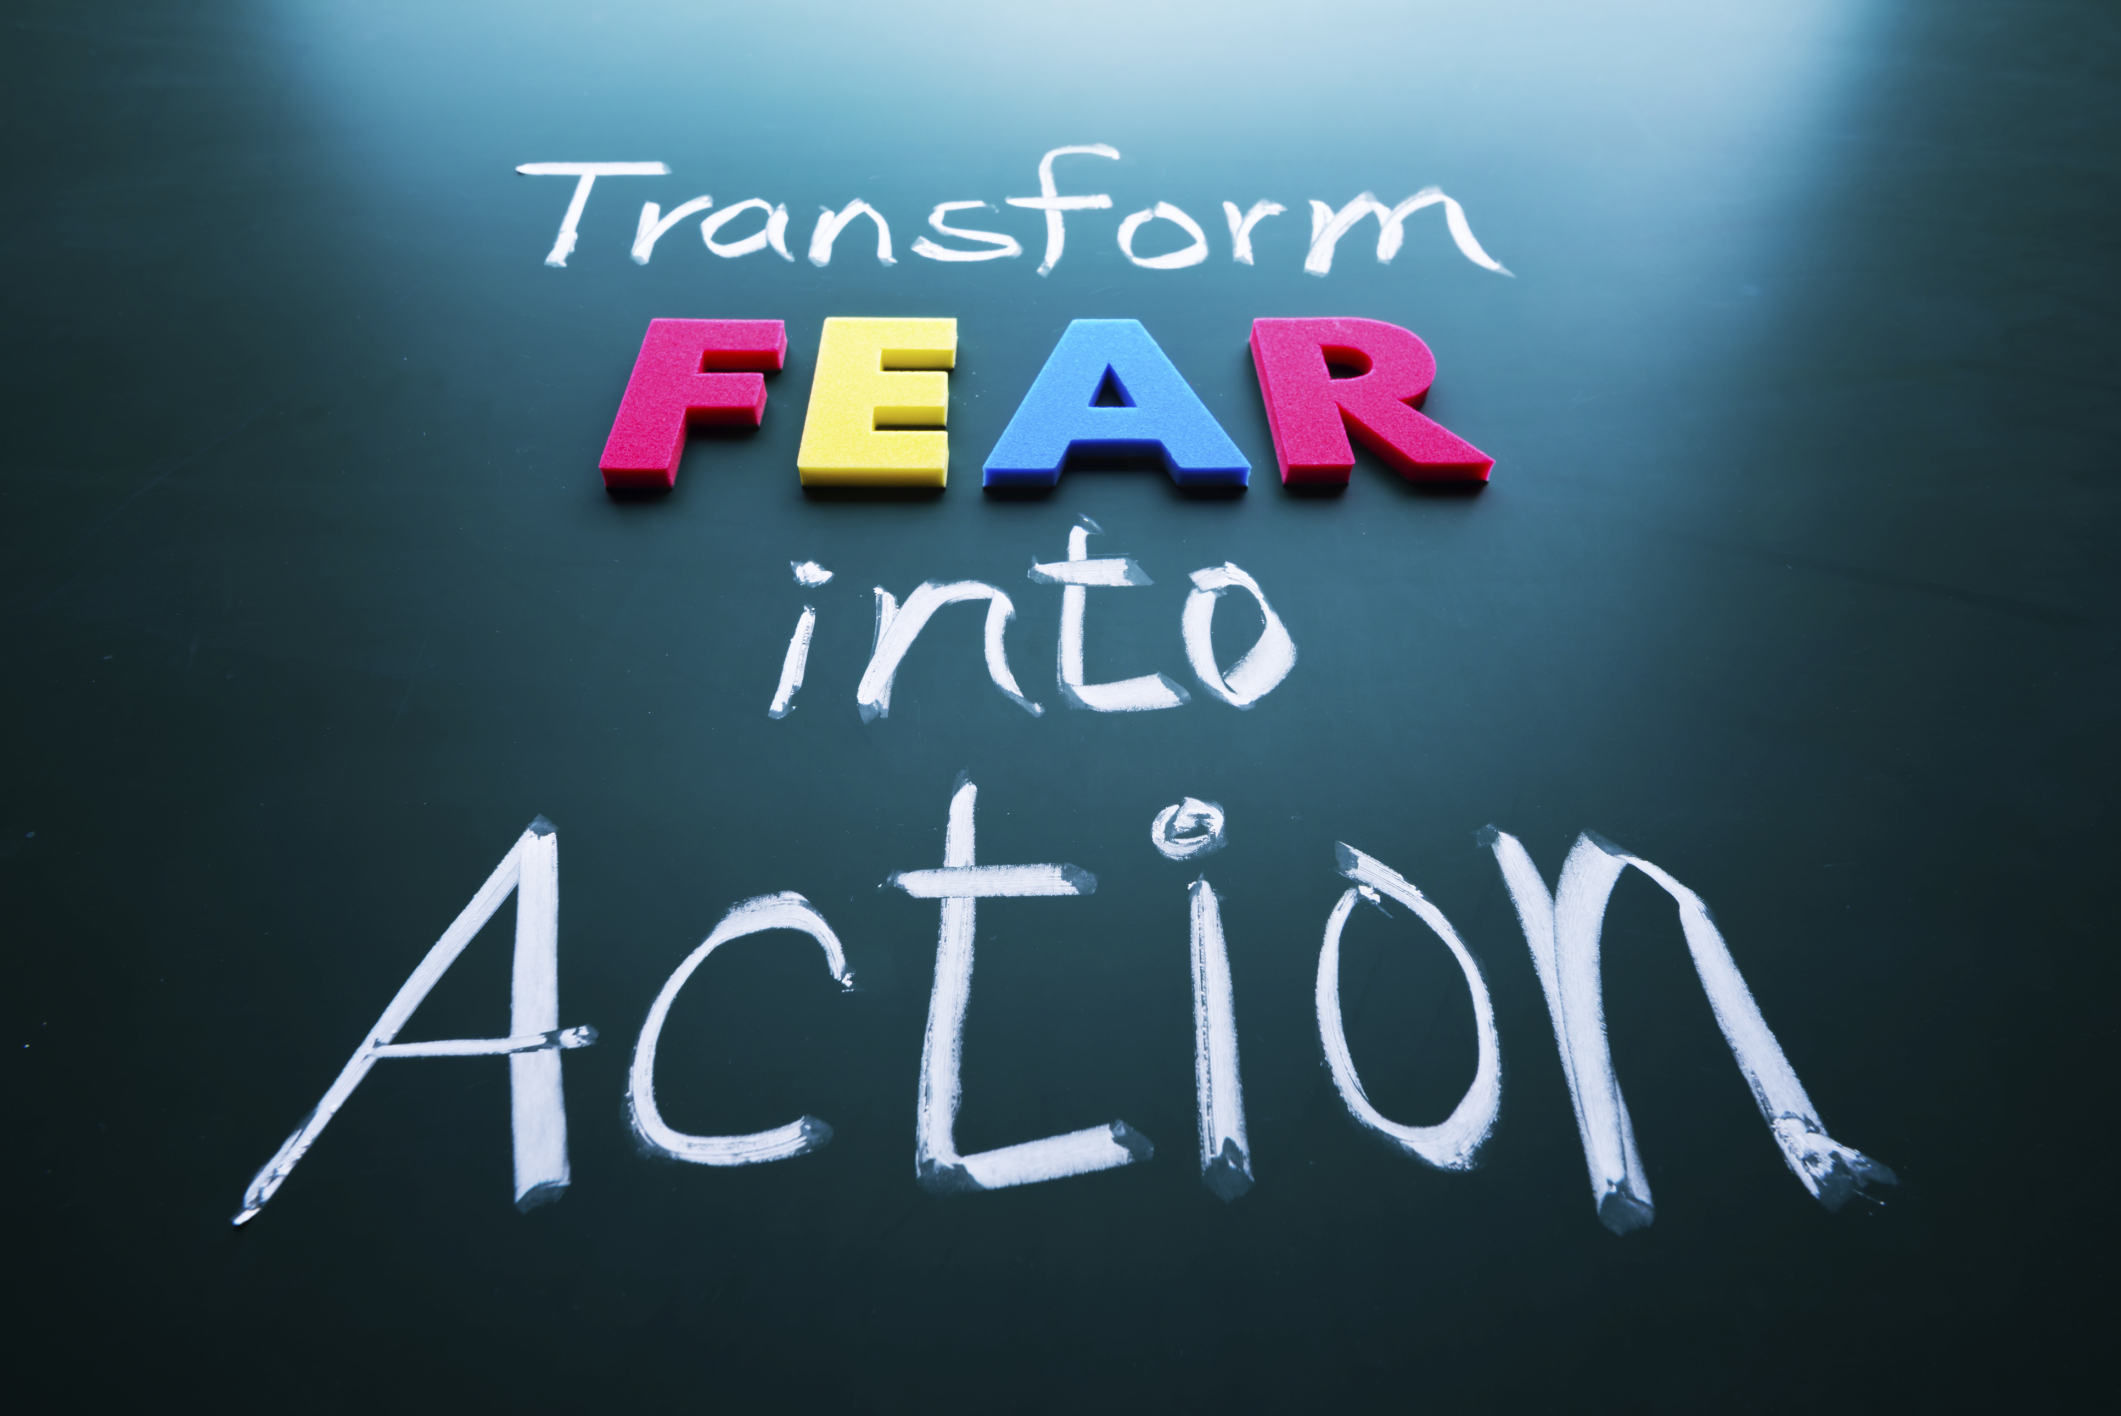 Transform fear into action concept